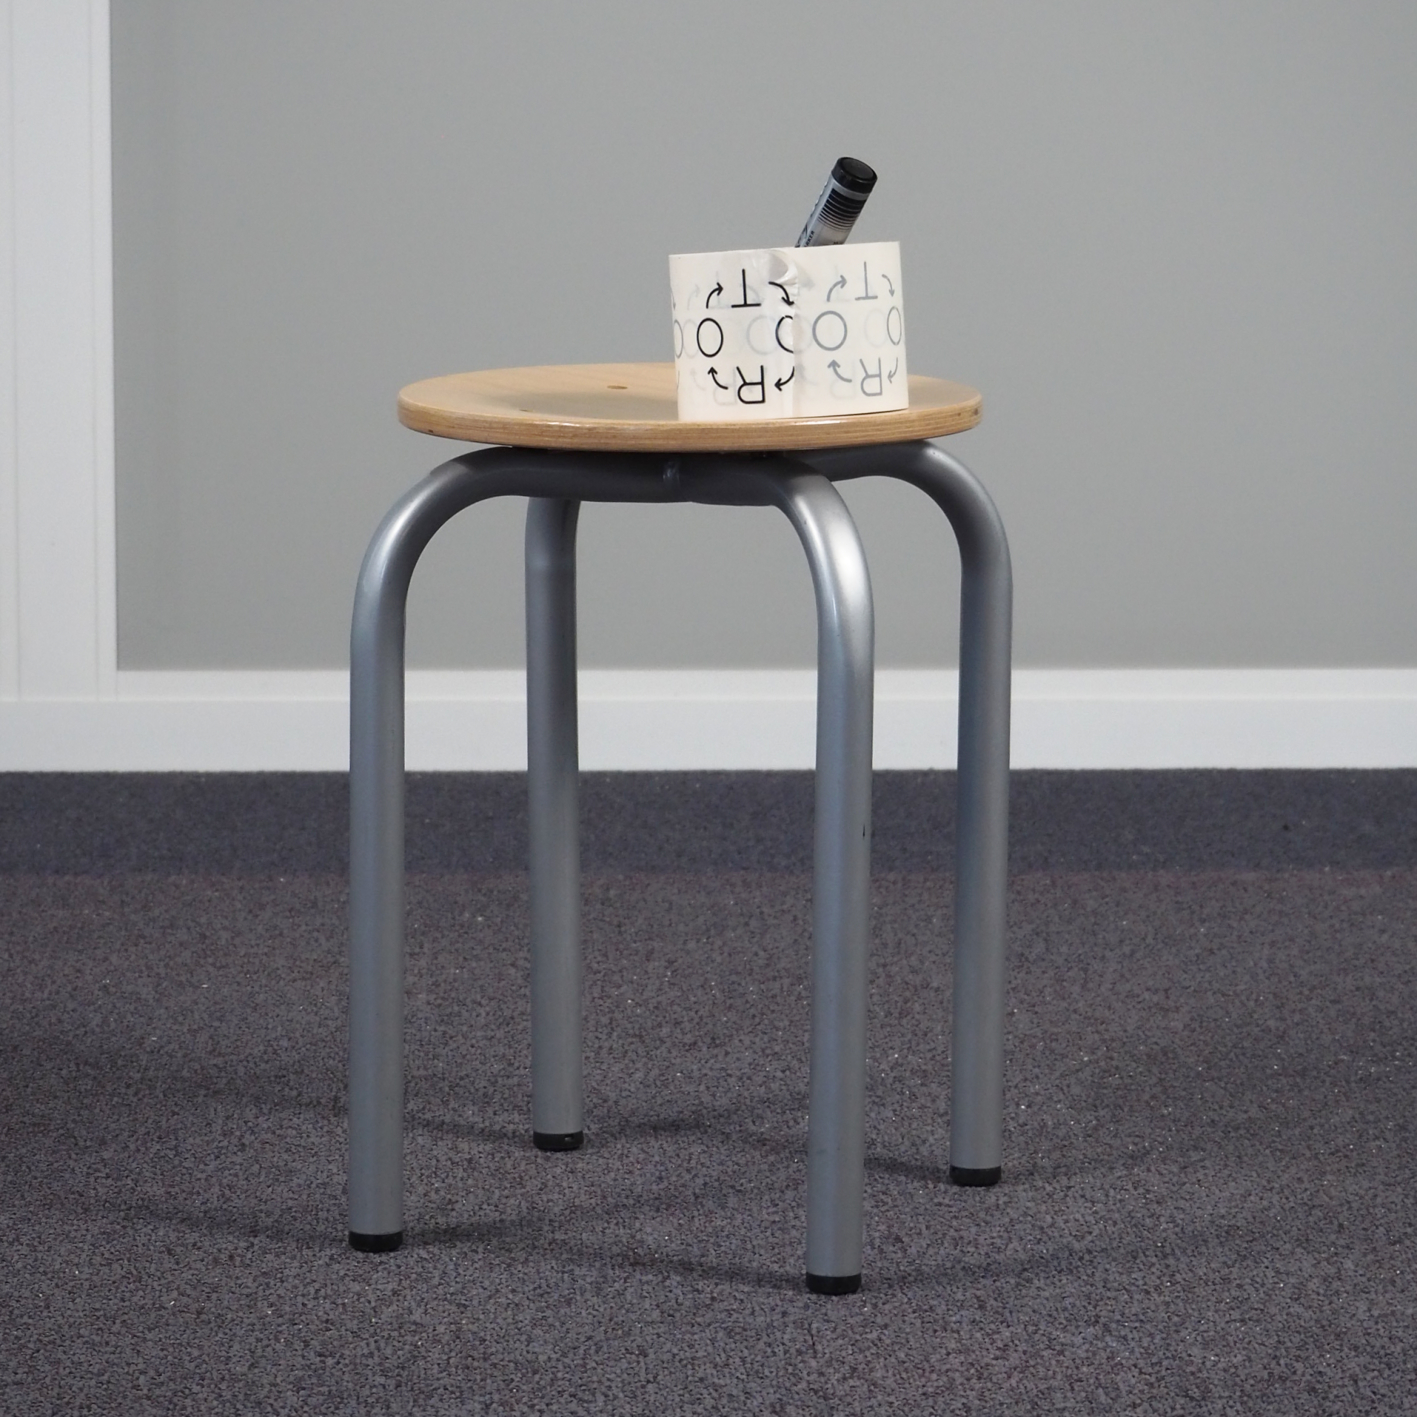 Small school stool with steel legs